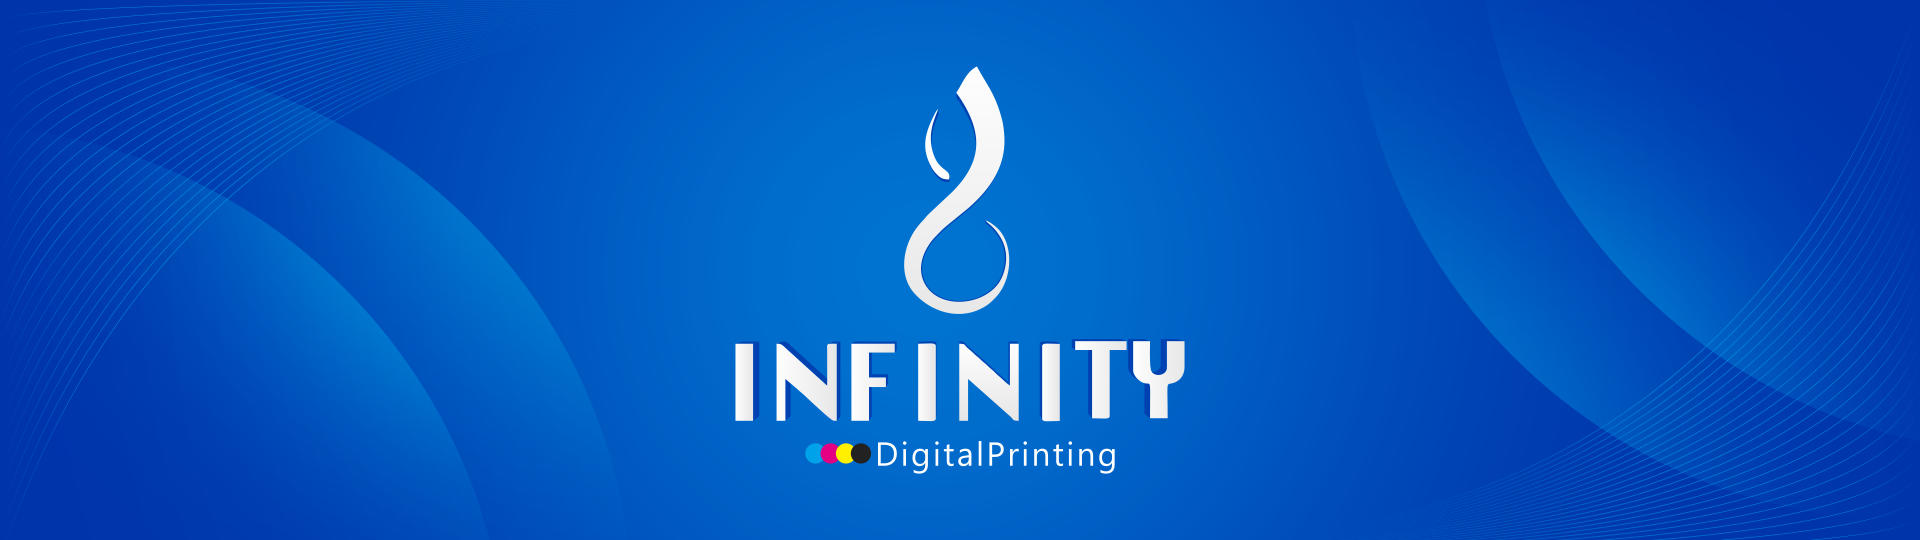 infinity digital printing